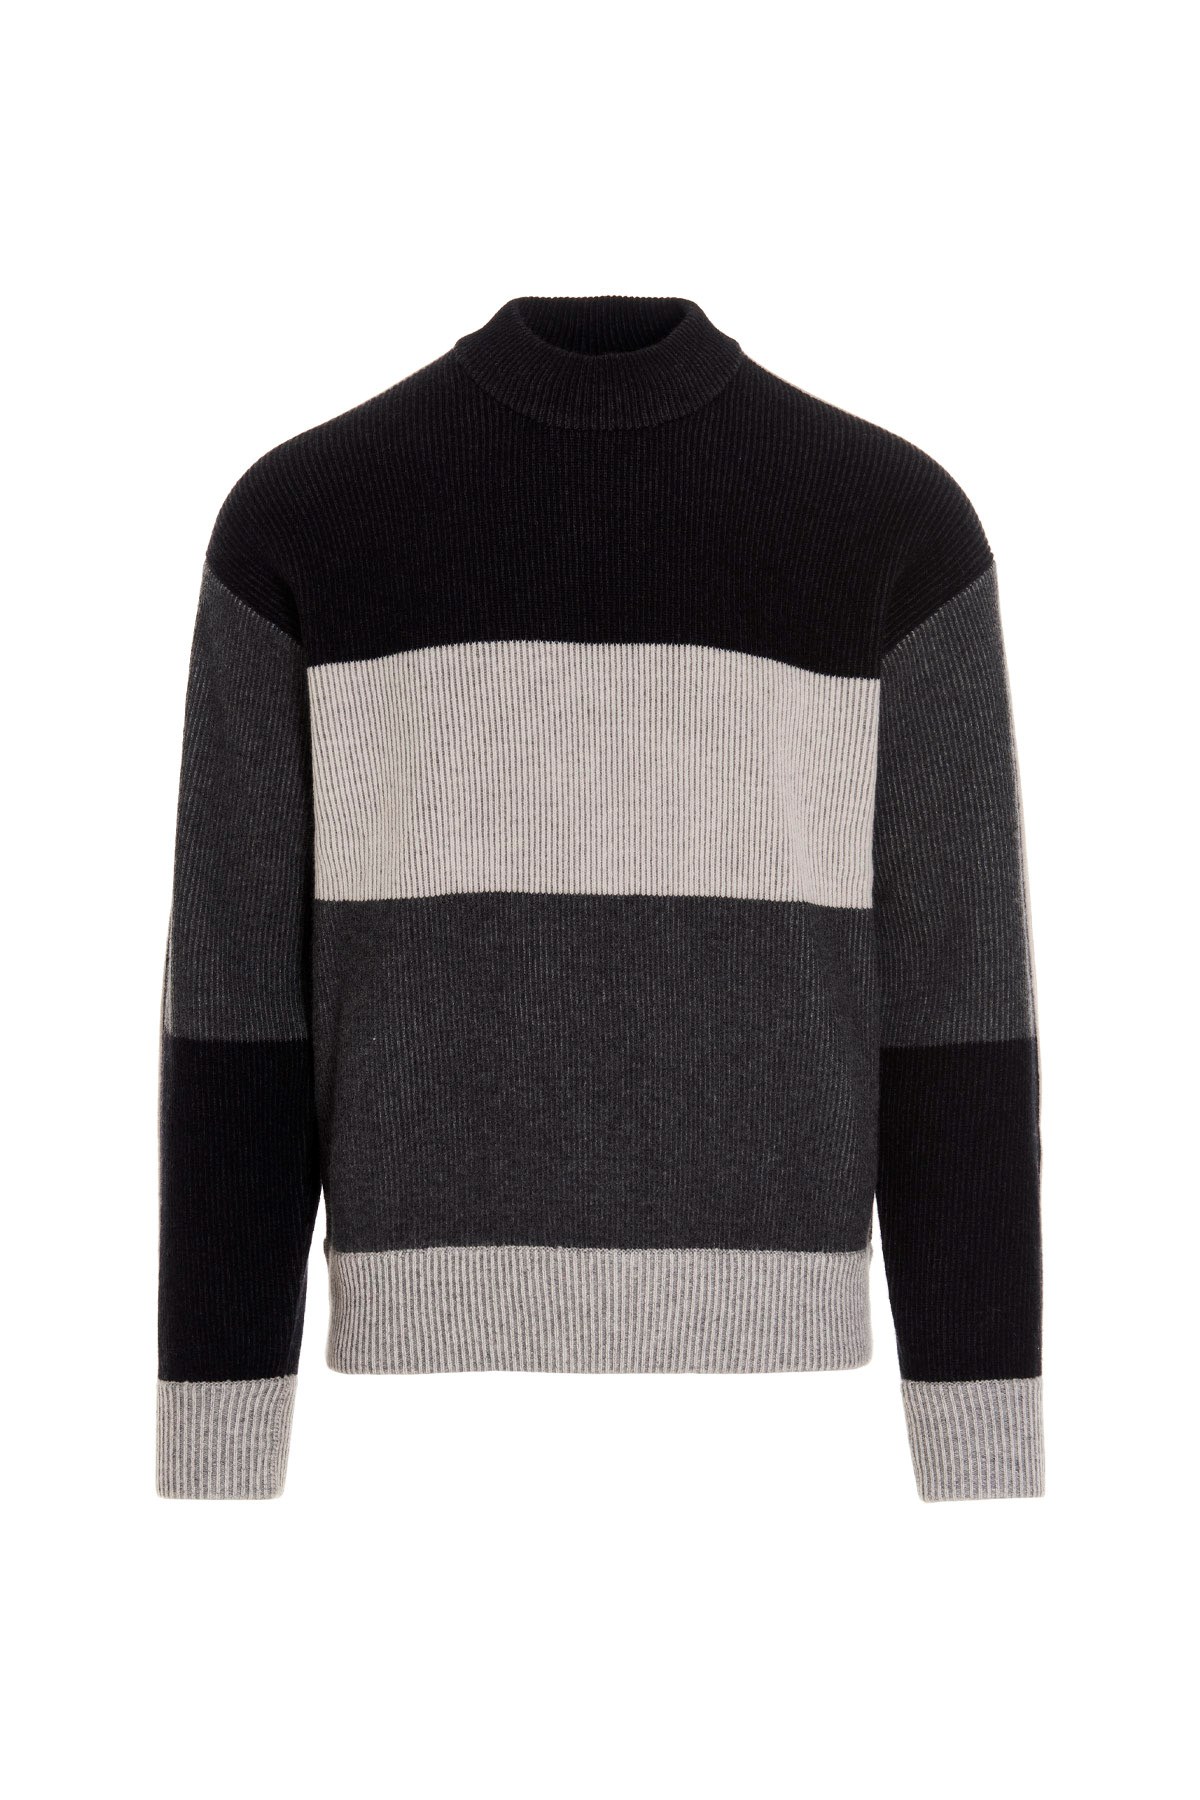 Z ZEGNA Color Block Sweater